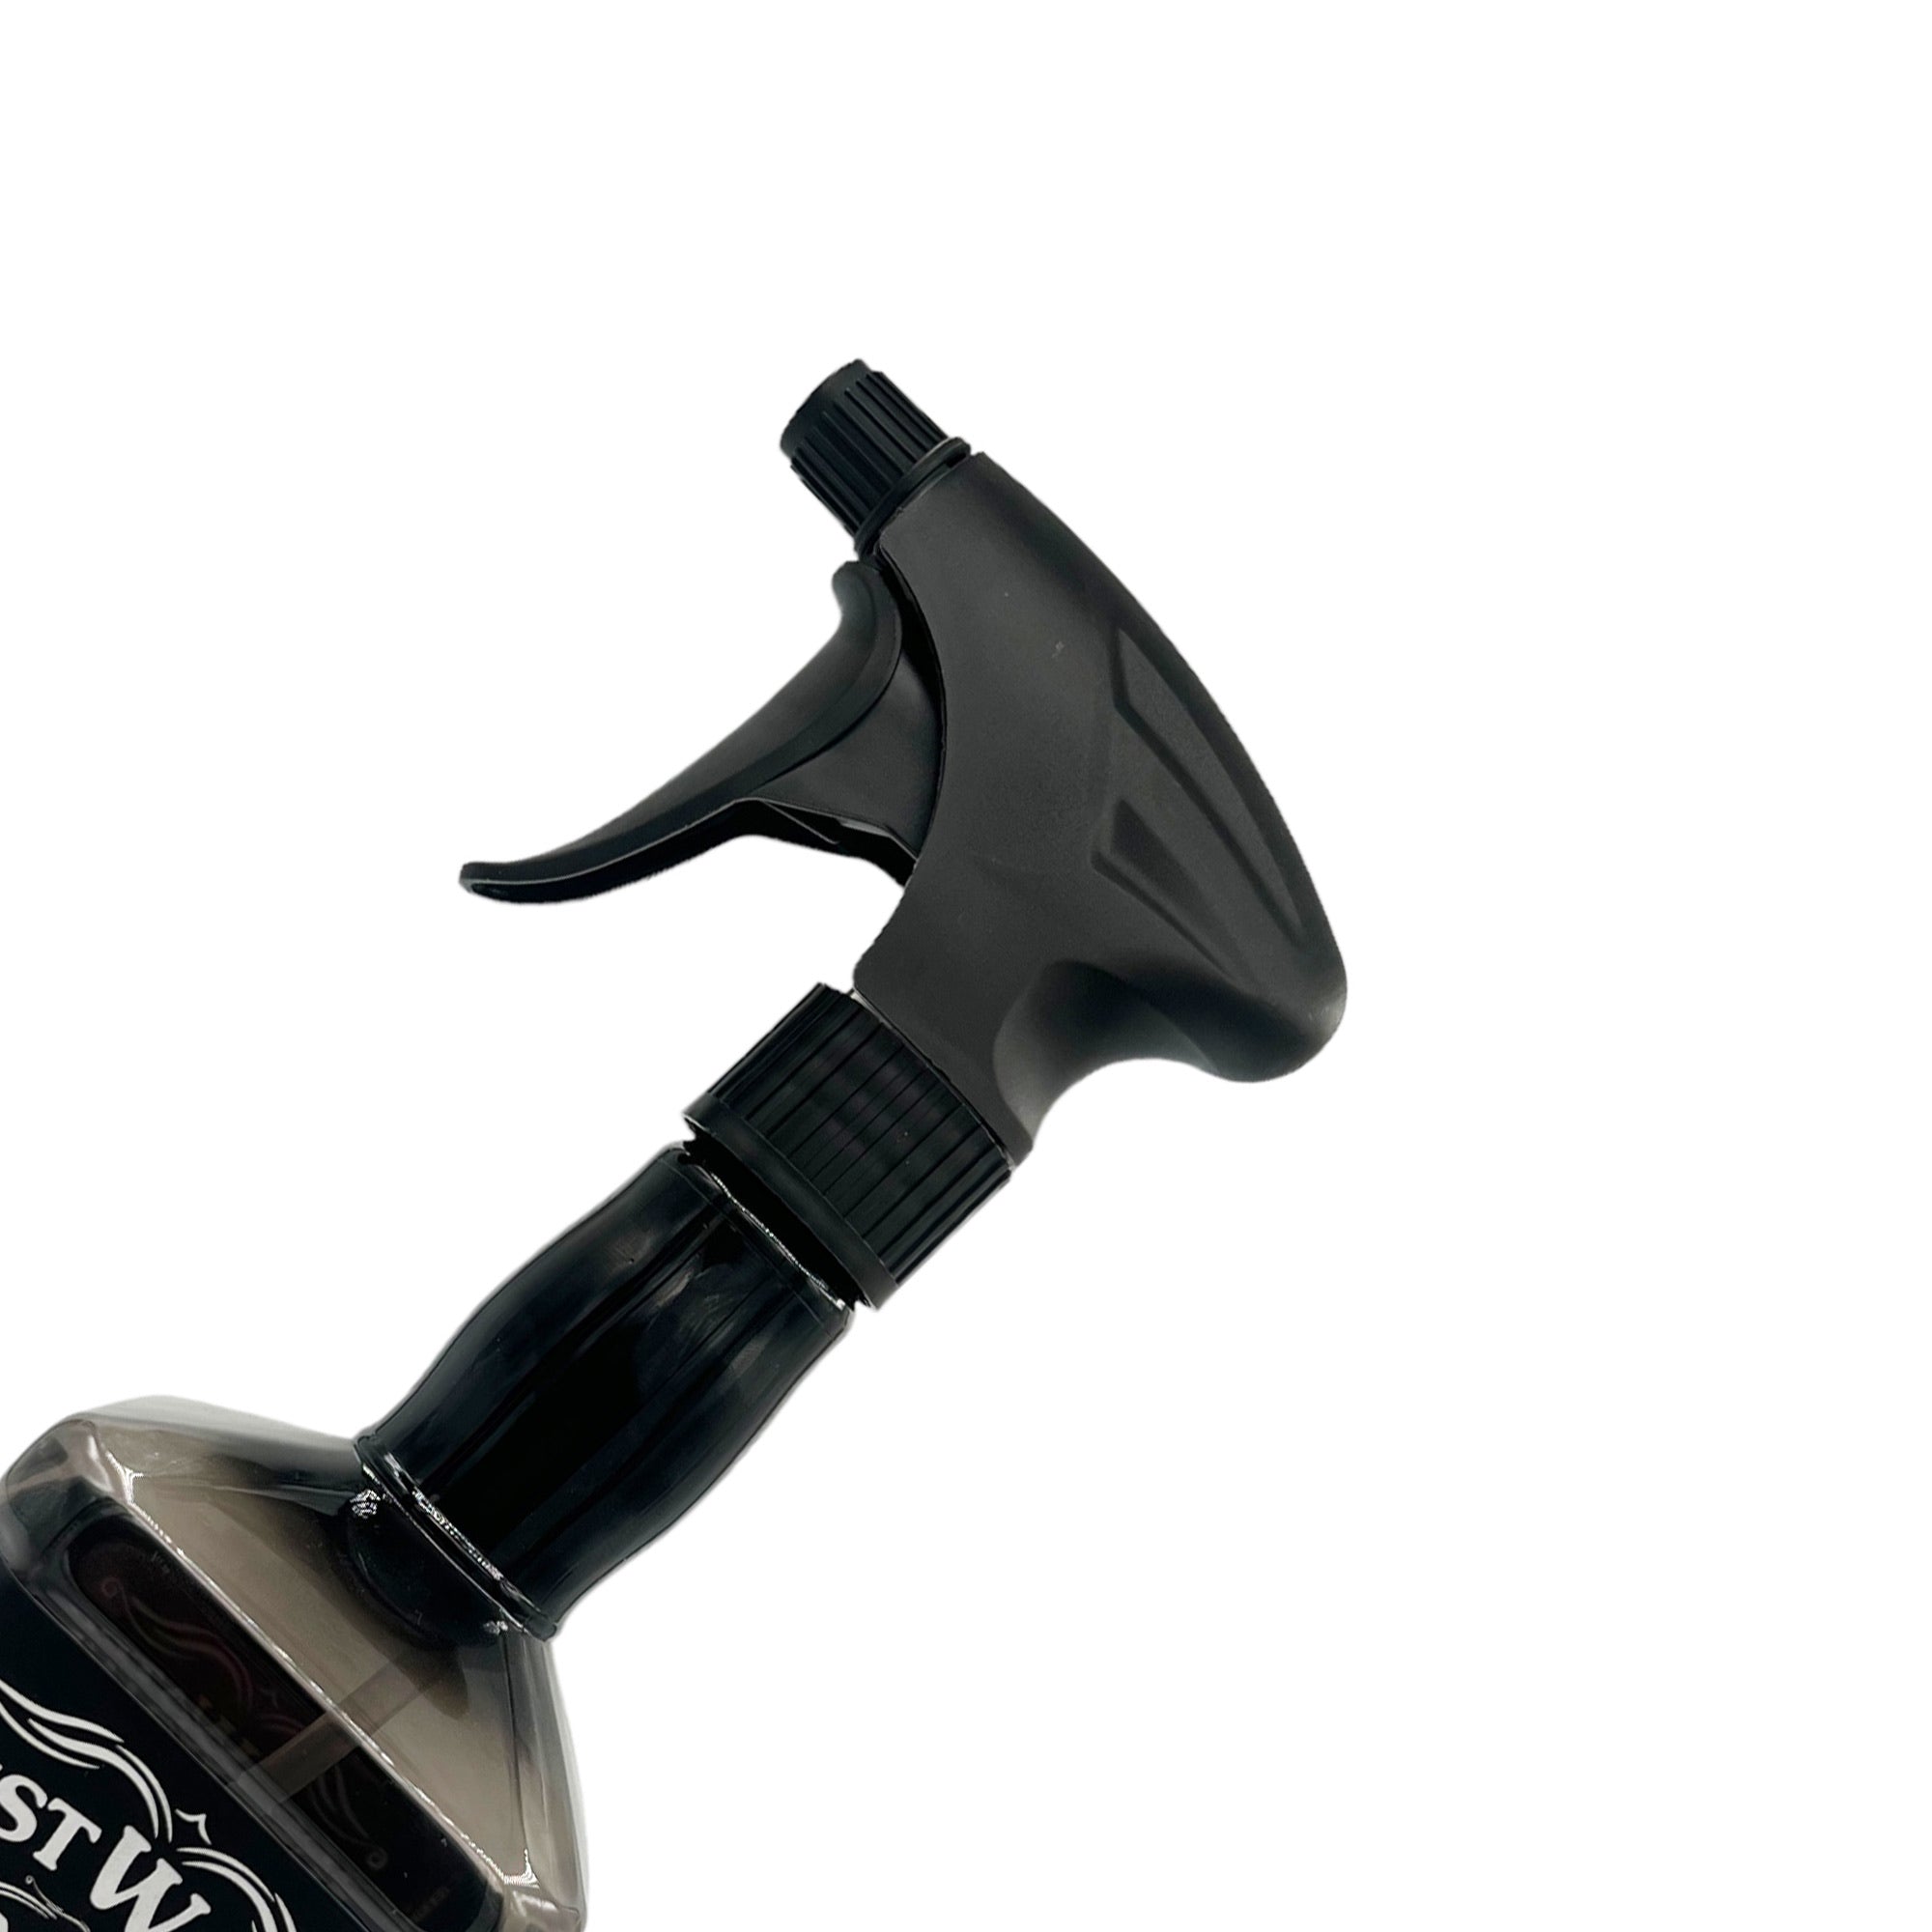 Eson - Water Spray Bottle 600ml Empty Refillable Ultra Fine Mist Sprayer (Black)